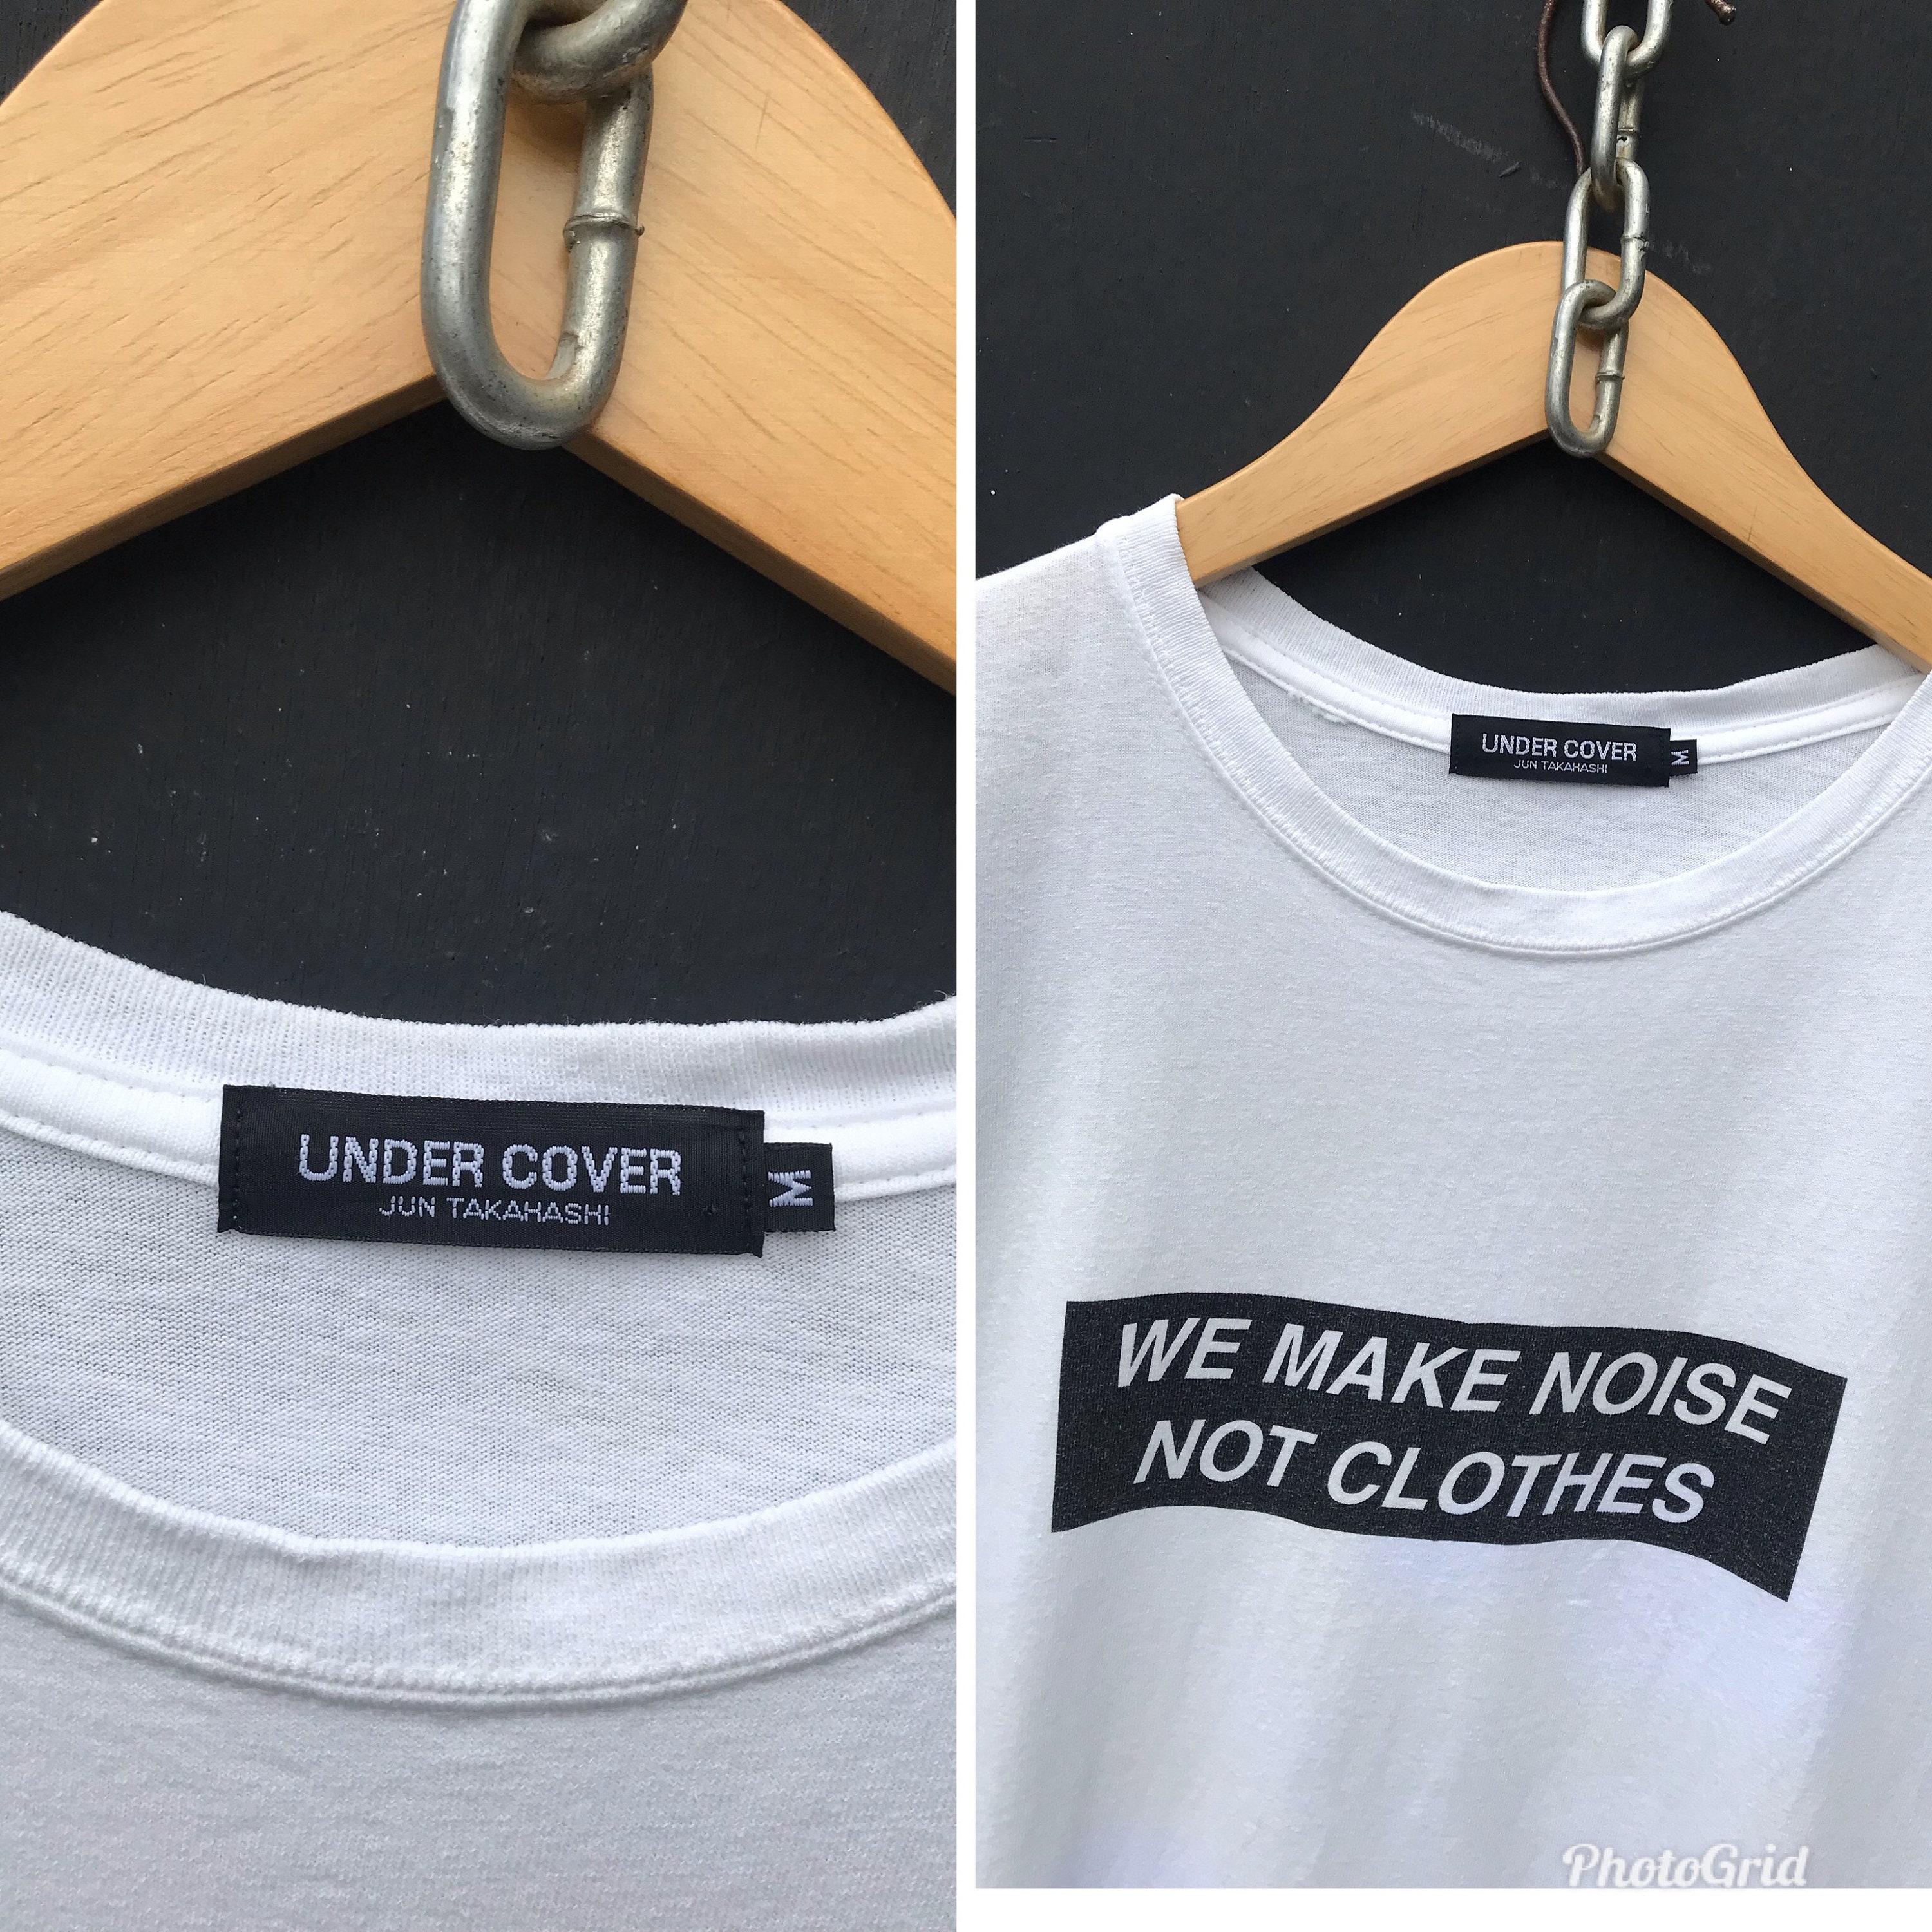 Undercover Shirt Vintage Undercover We Make Noise Not Clothes Jun